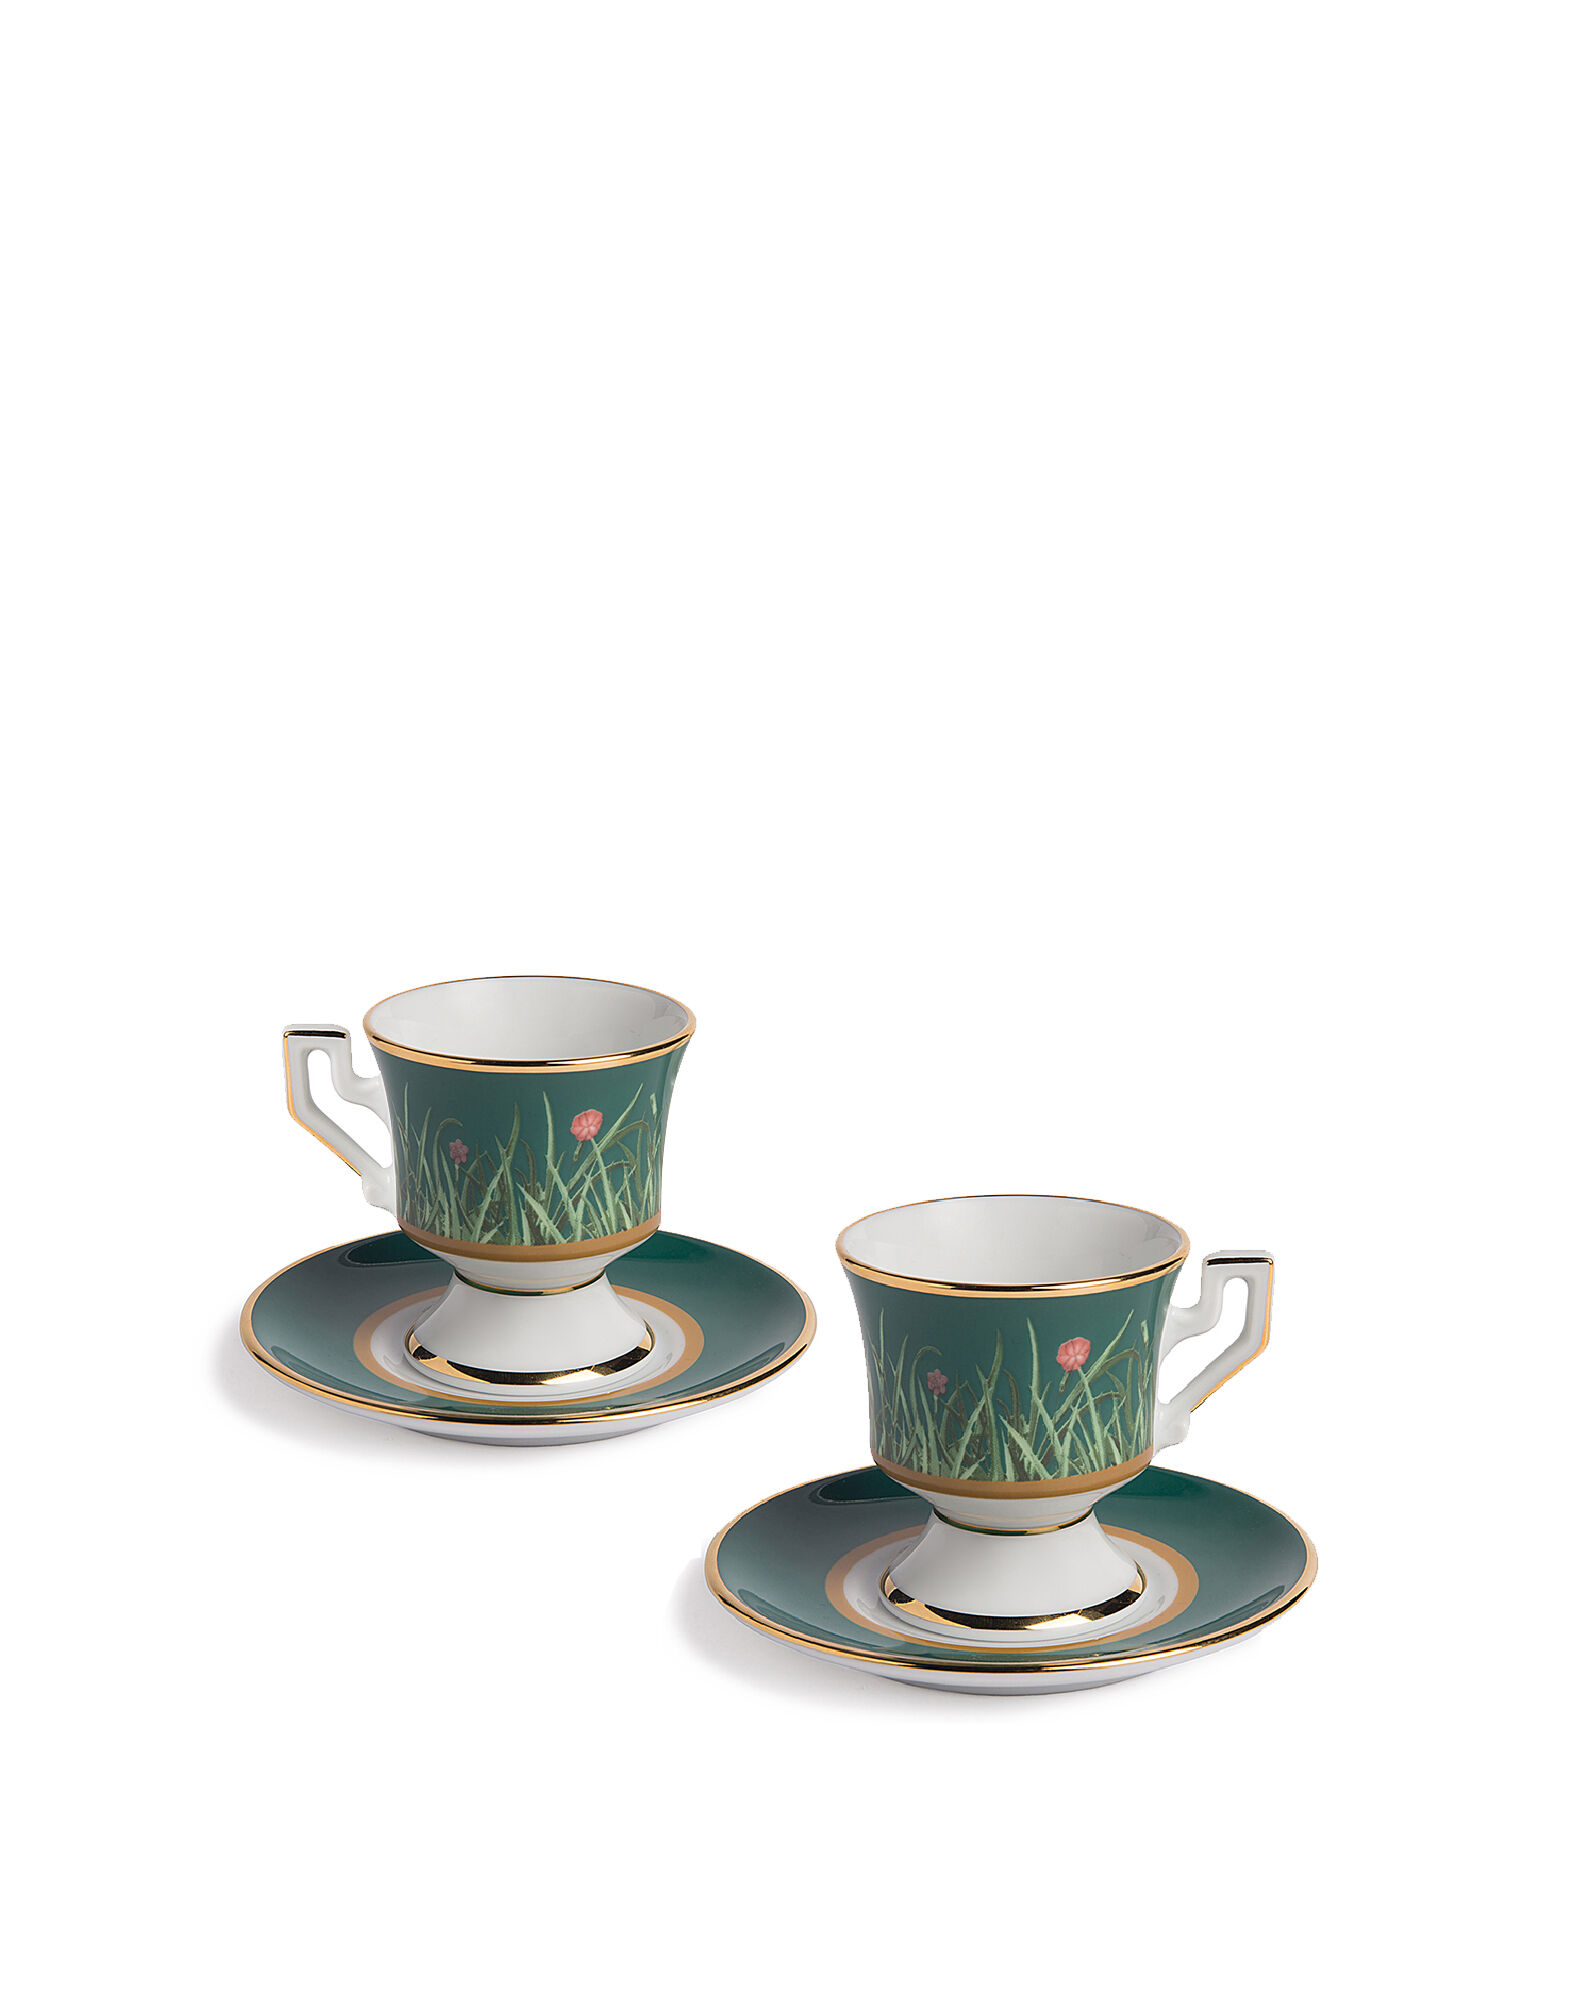 Espresso Cup, Porcelain Espresso Cups